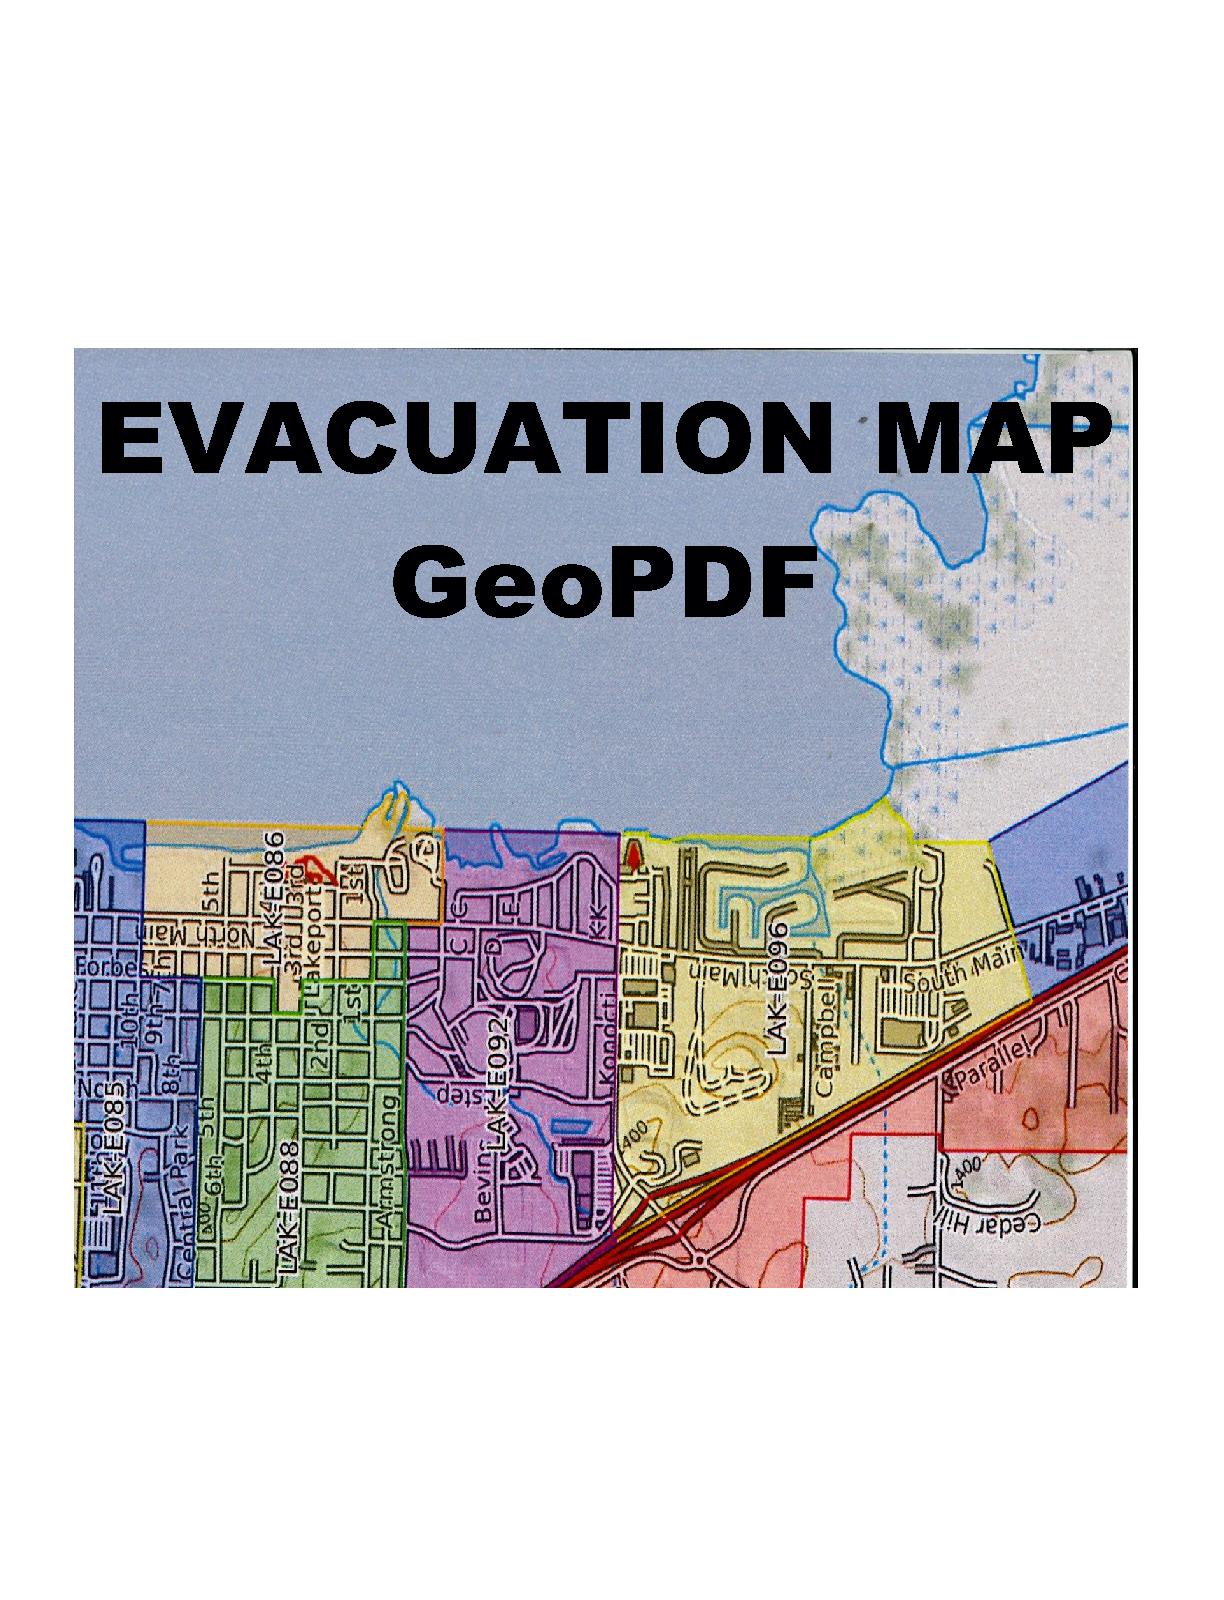 Evacuation Map Image - Rendered